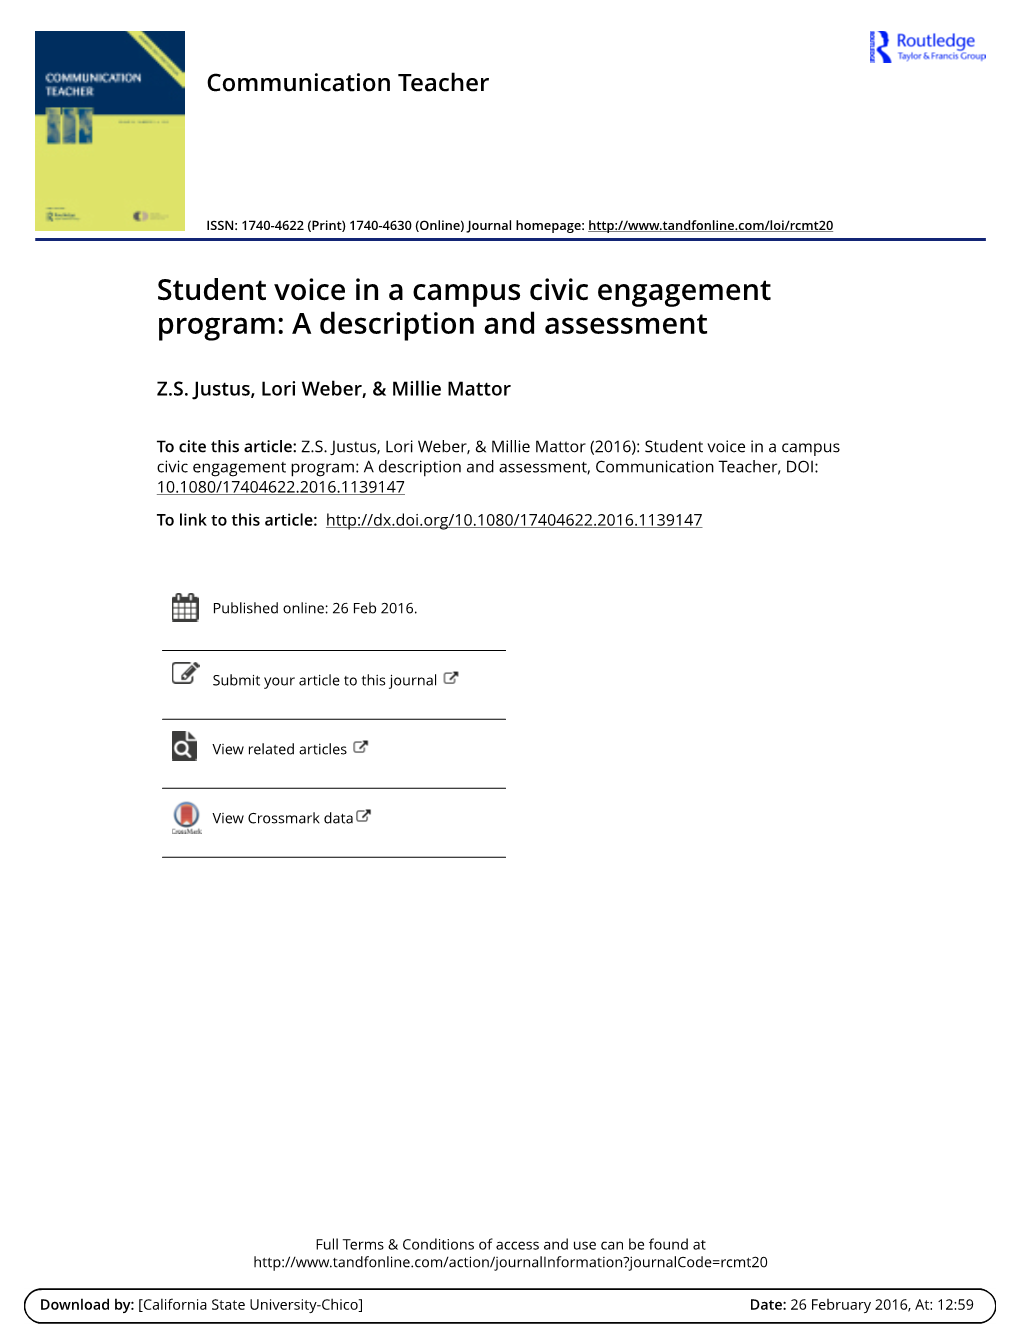 Student Voice in a Campus Civic Engagement Program: a Description and Assessment